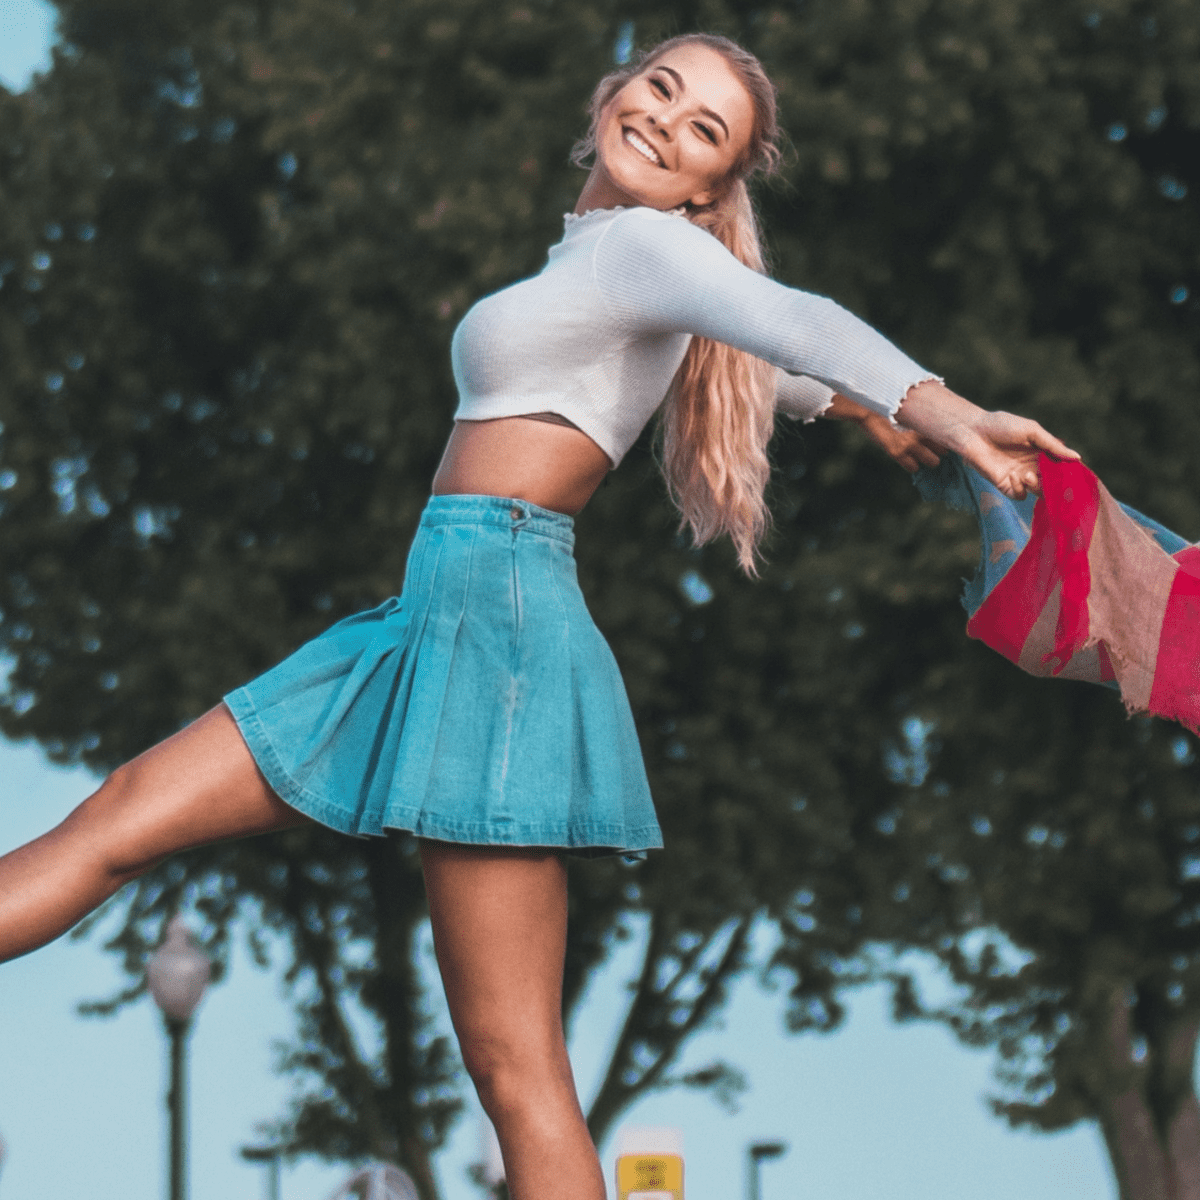 darien love share super short skirts in public photos